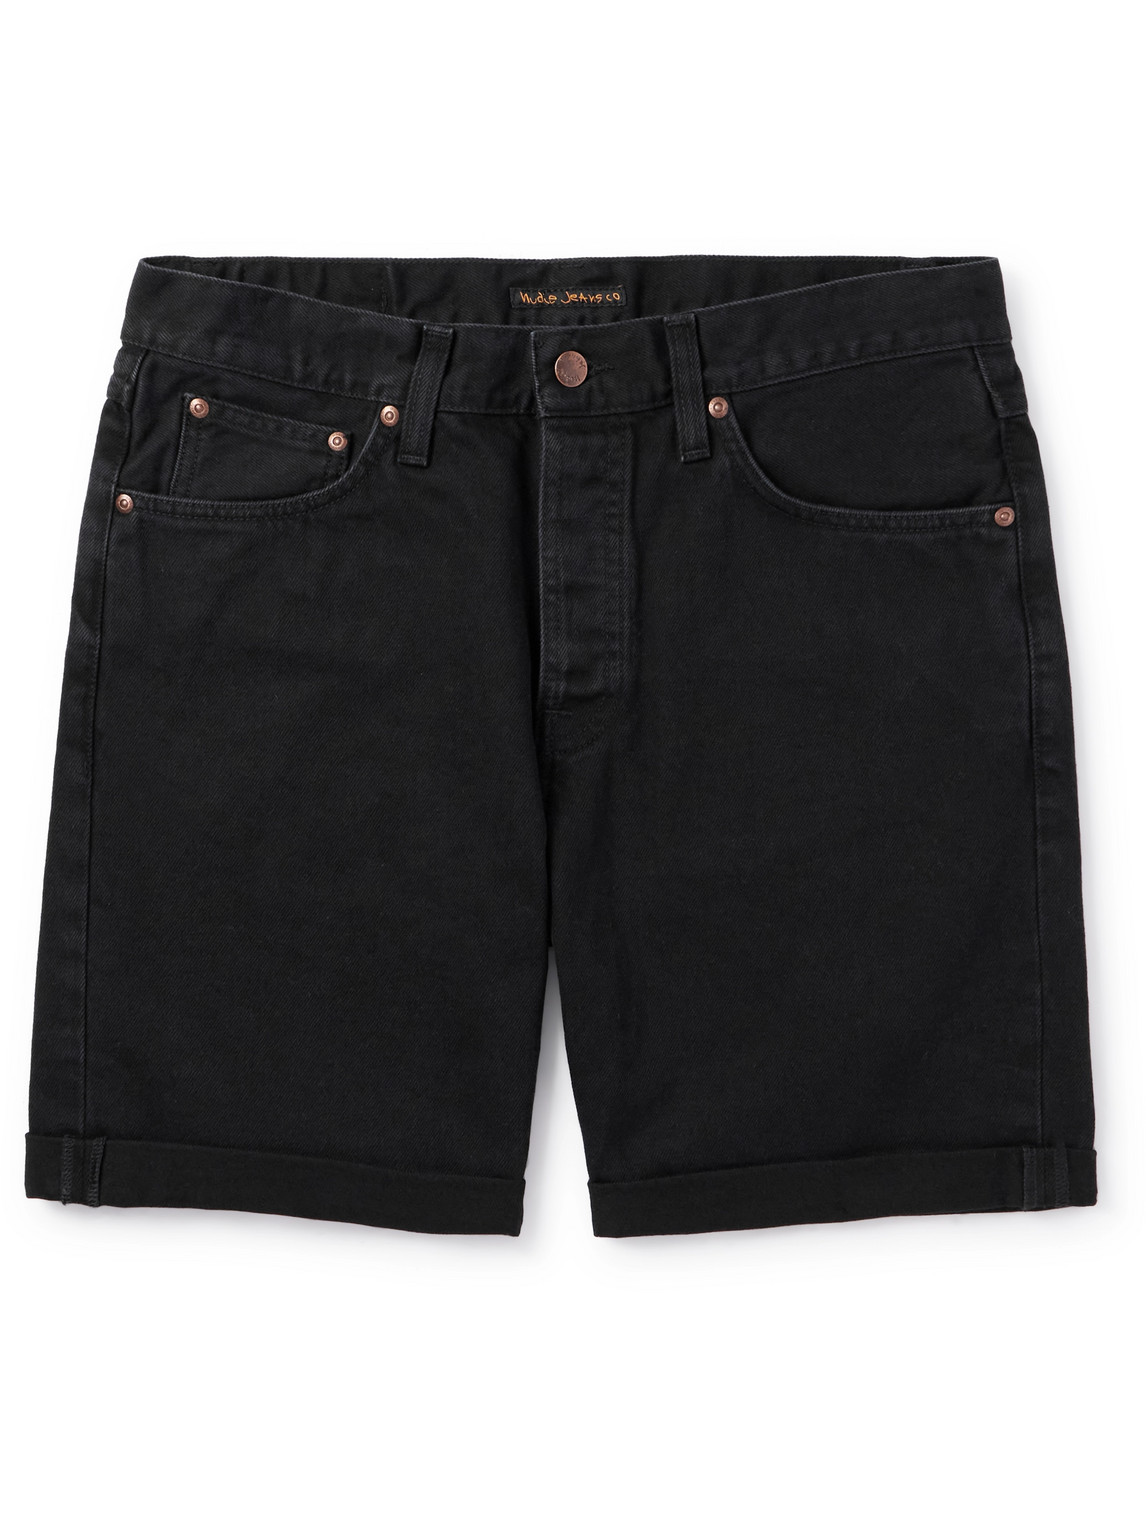 Nudie Jeans Josh Denim Shorts In Black